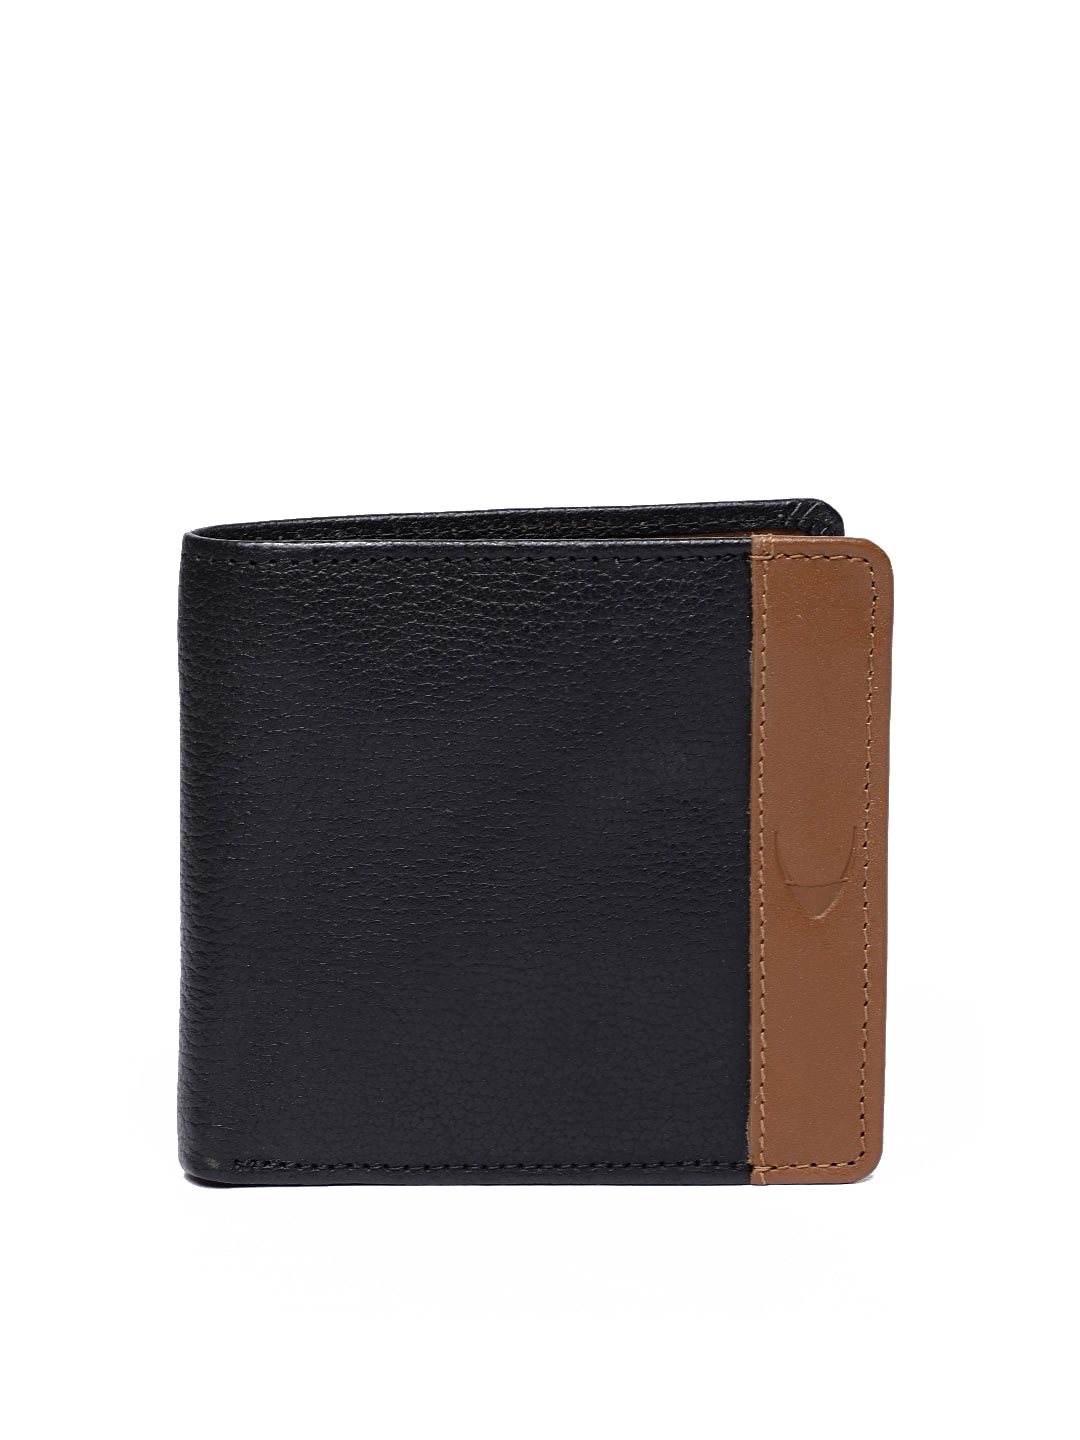 Buy Hidesign Men Black & Tan Two Fold Wallet - Wallets for Men 3389198 ...